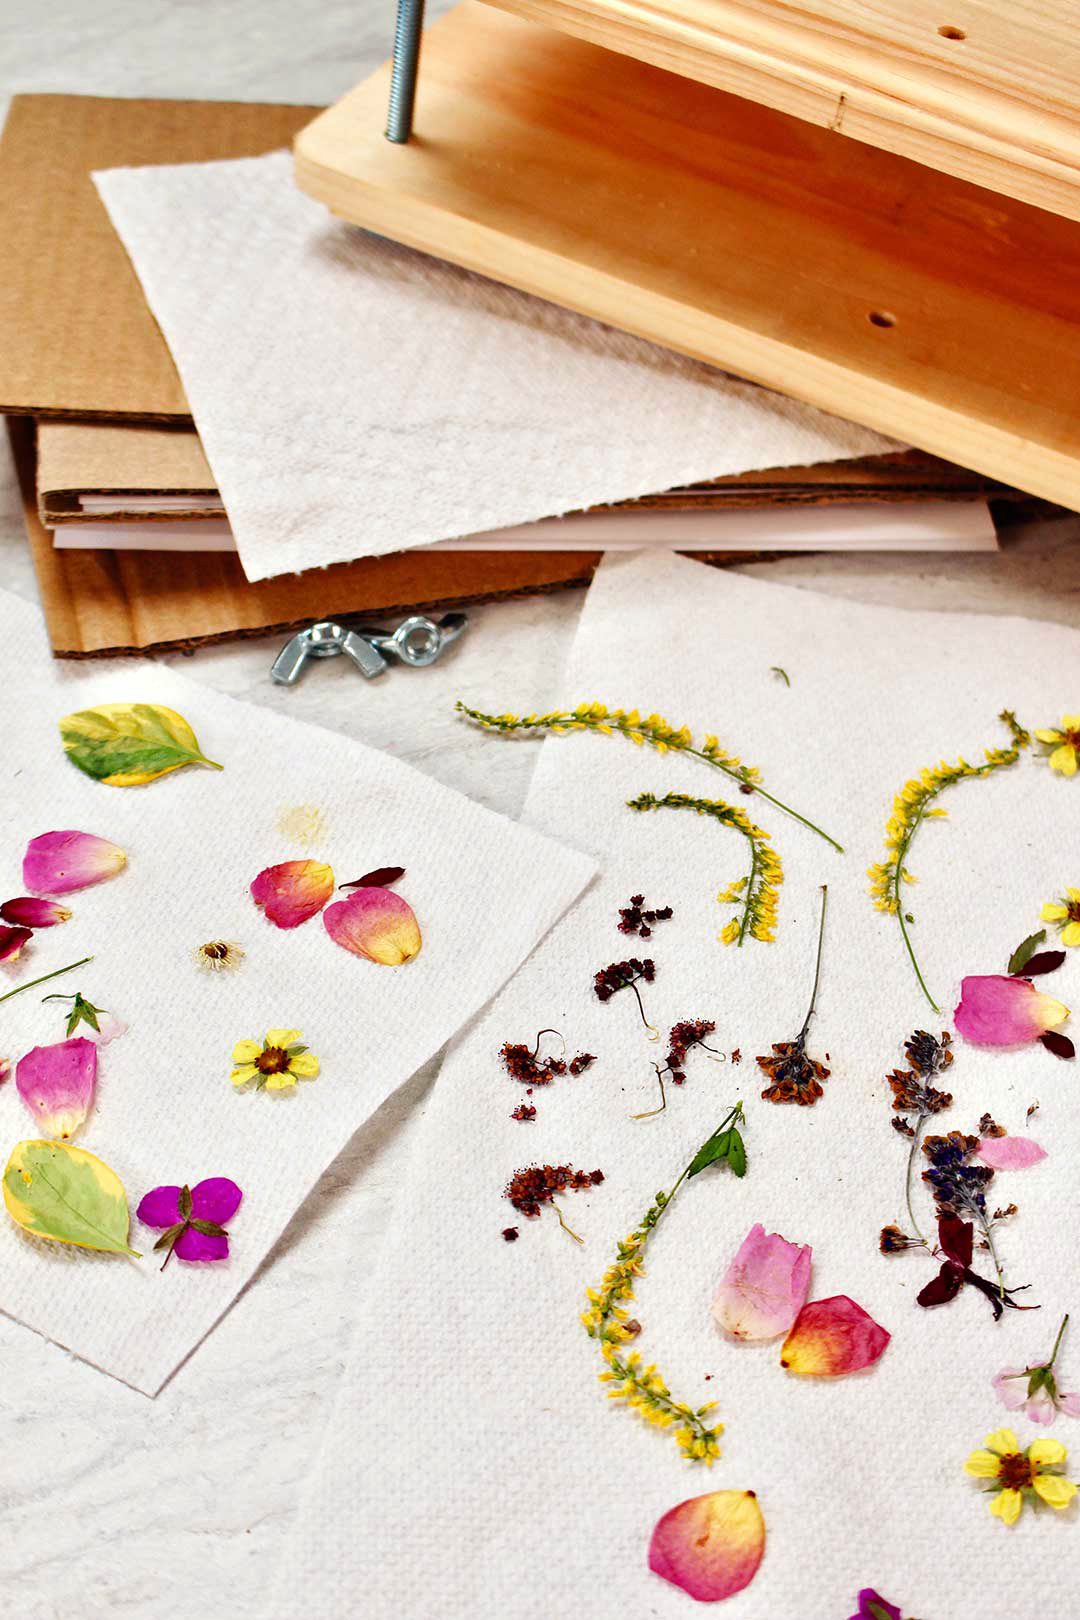 How to Make Beautiful Pressed Flower Art - Welcome To Nana's